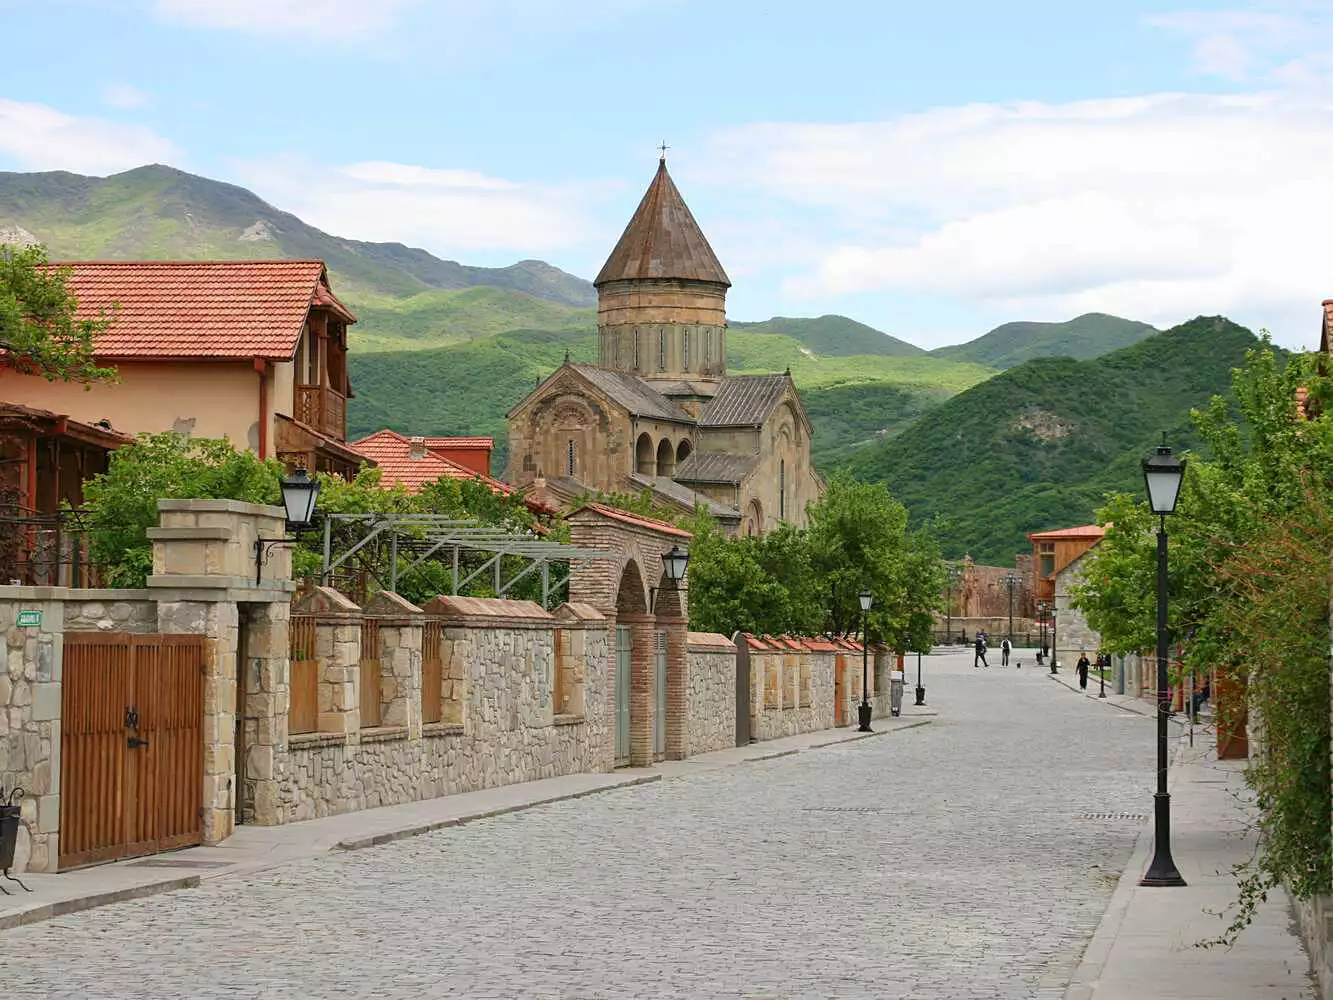 Dagtrip: Tbilisi en Mtskheta